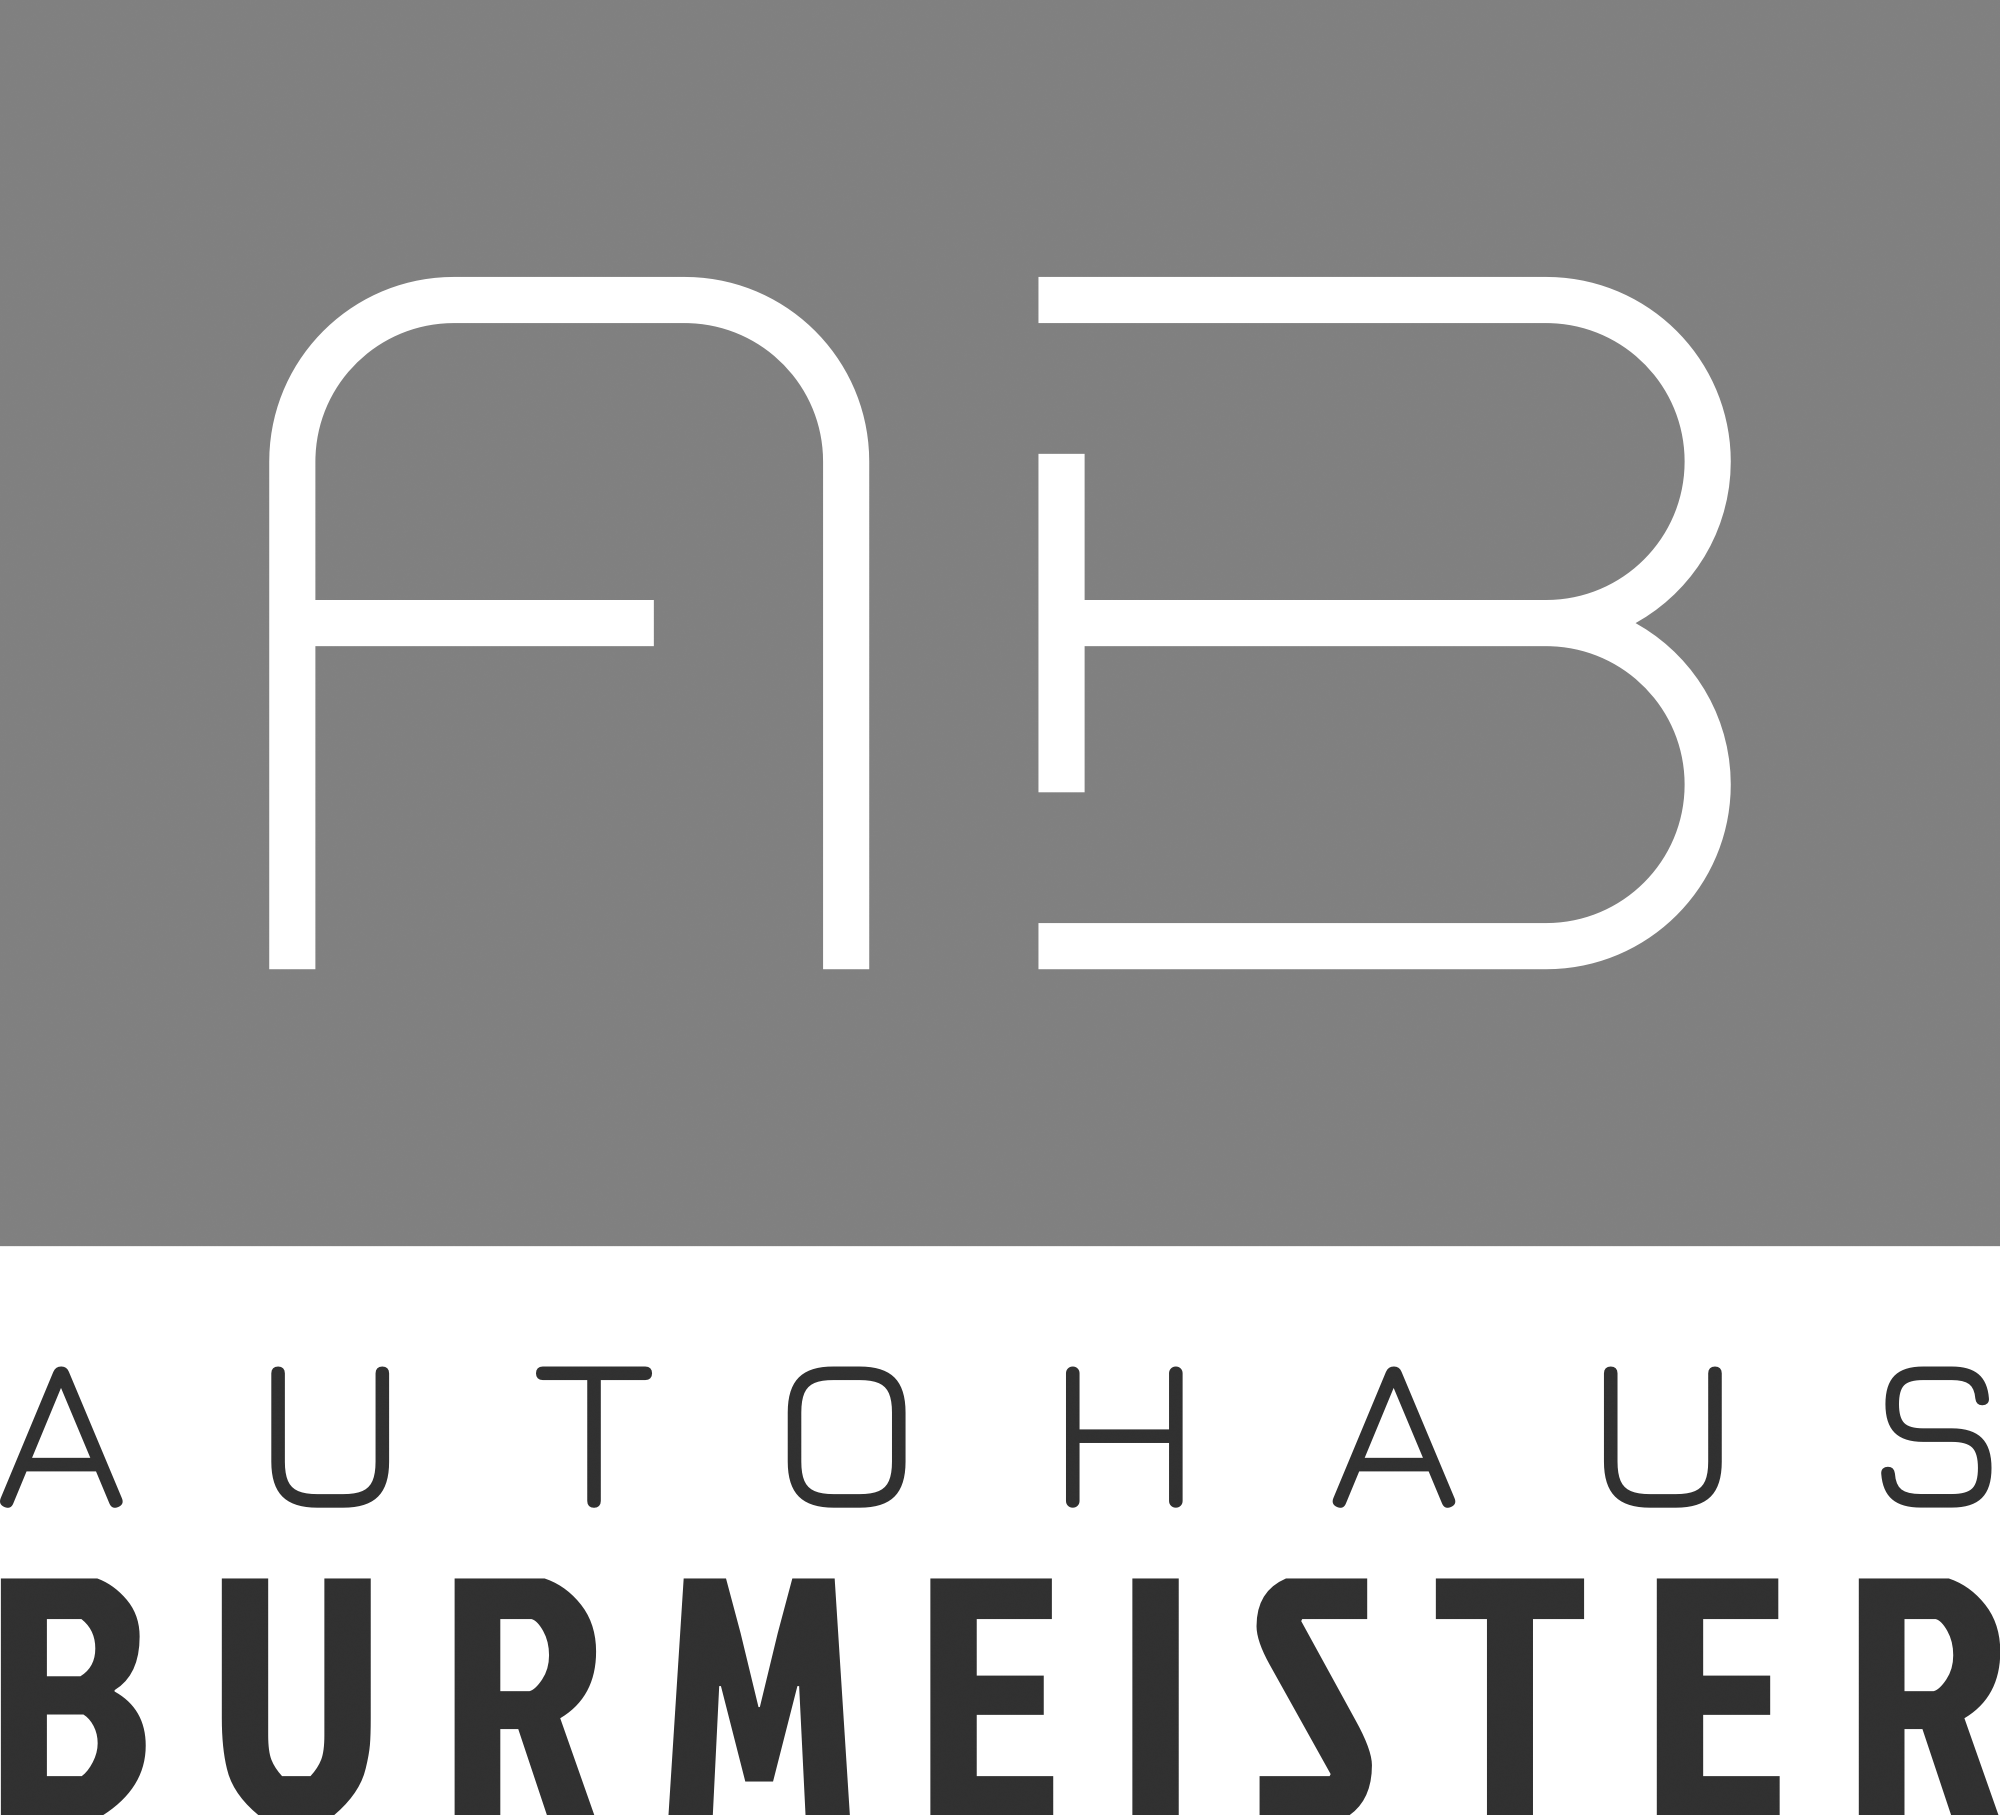 Autohaus Burmeister GmbH